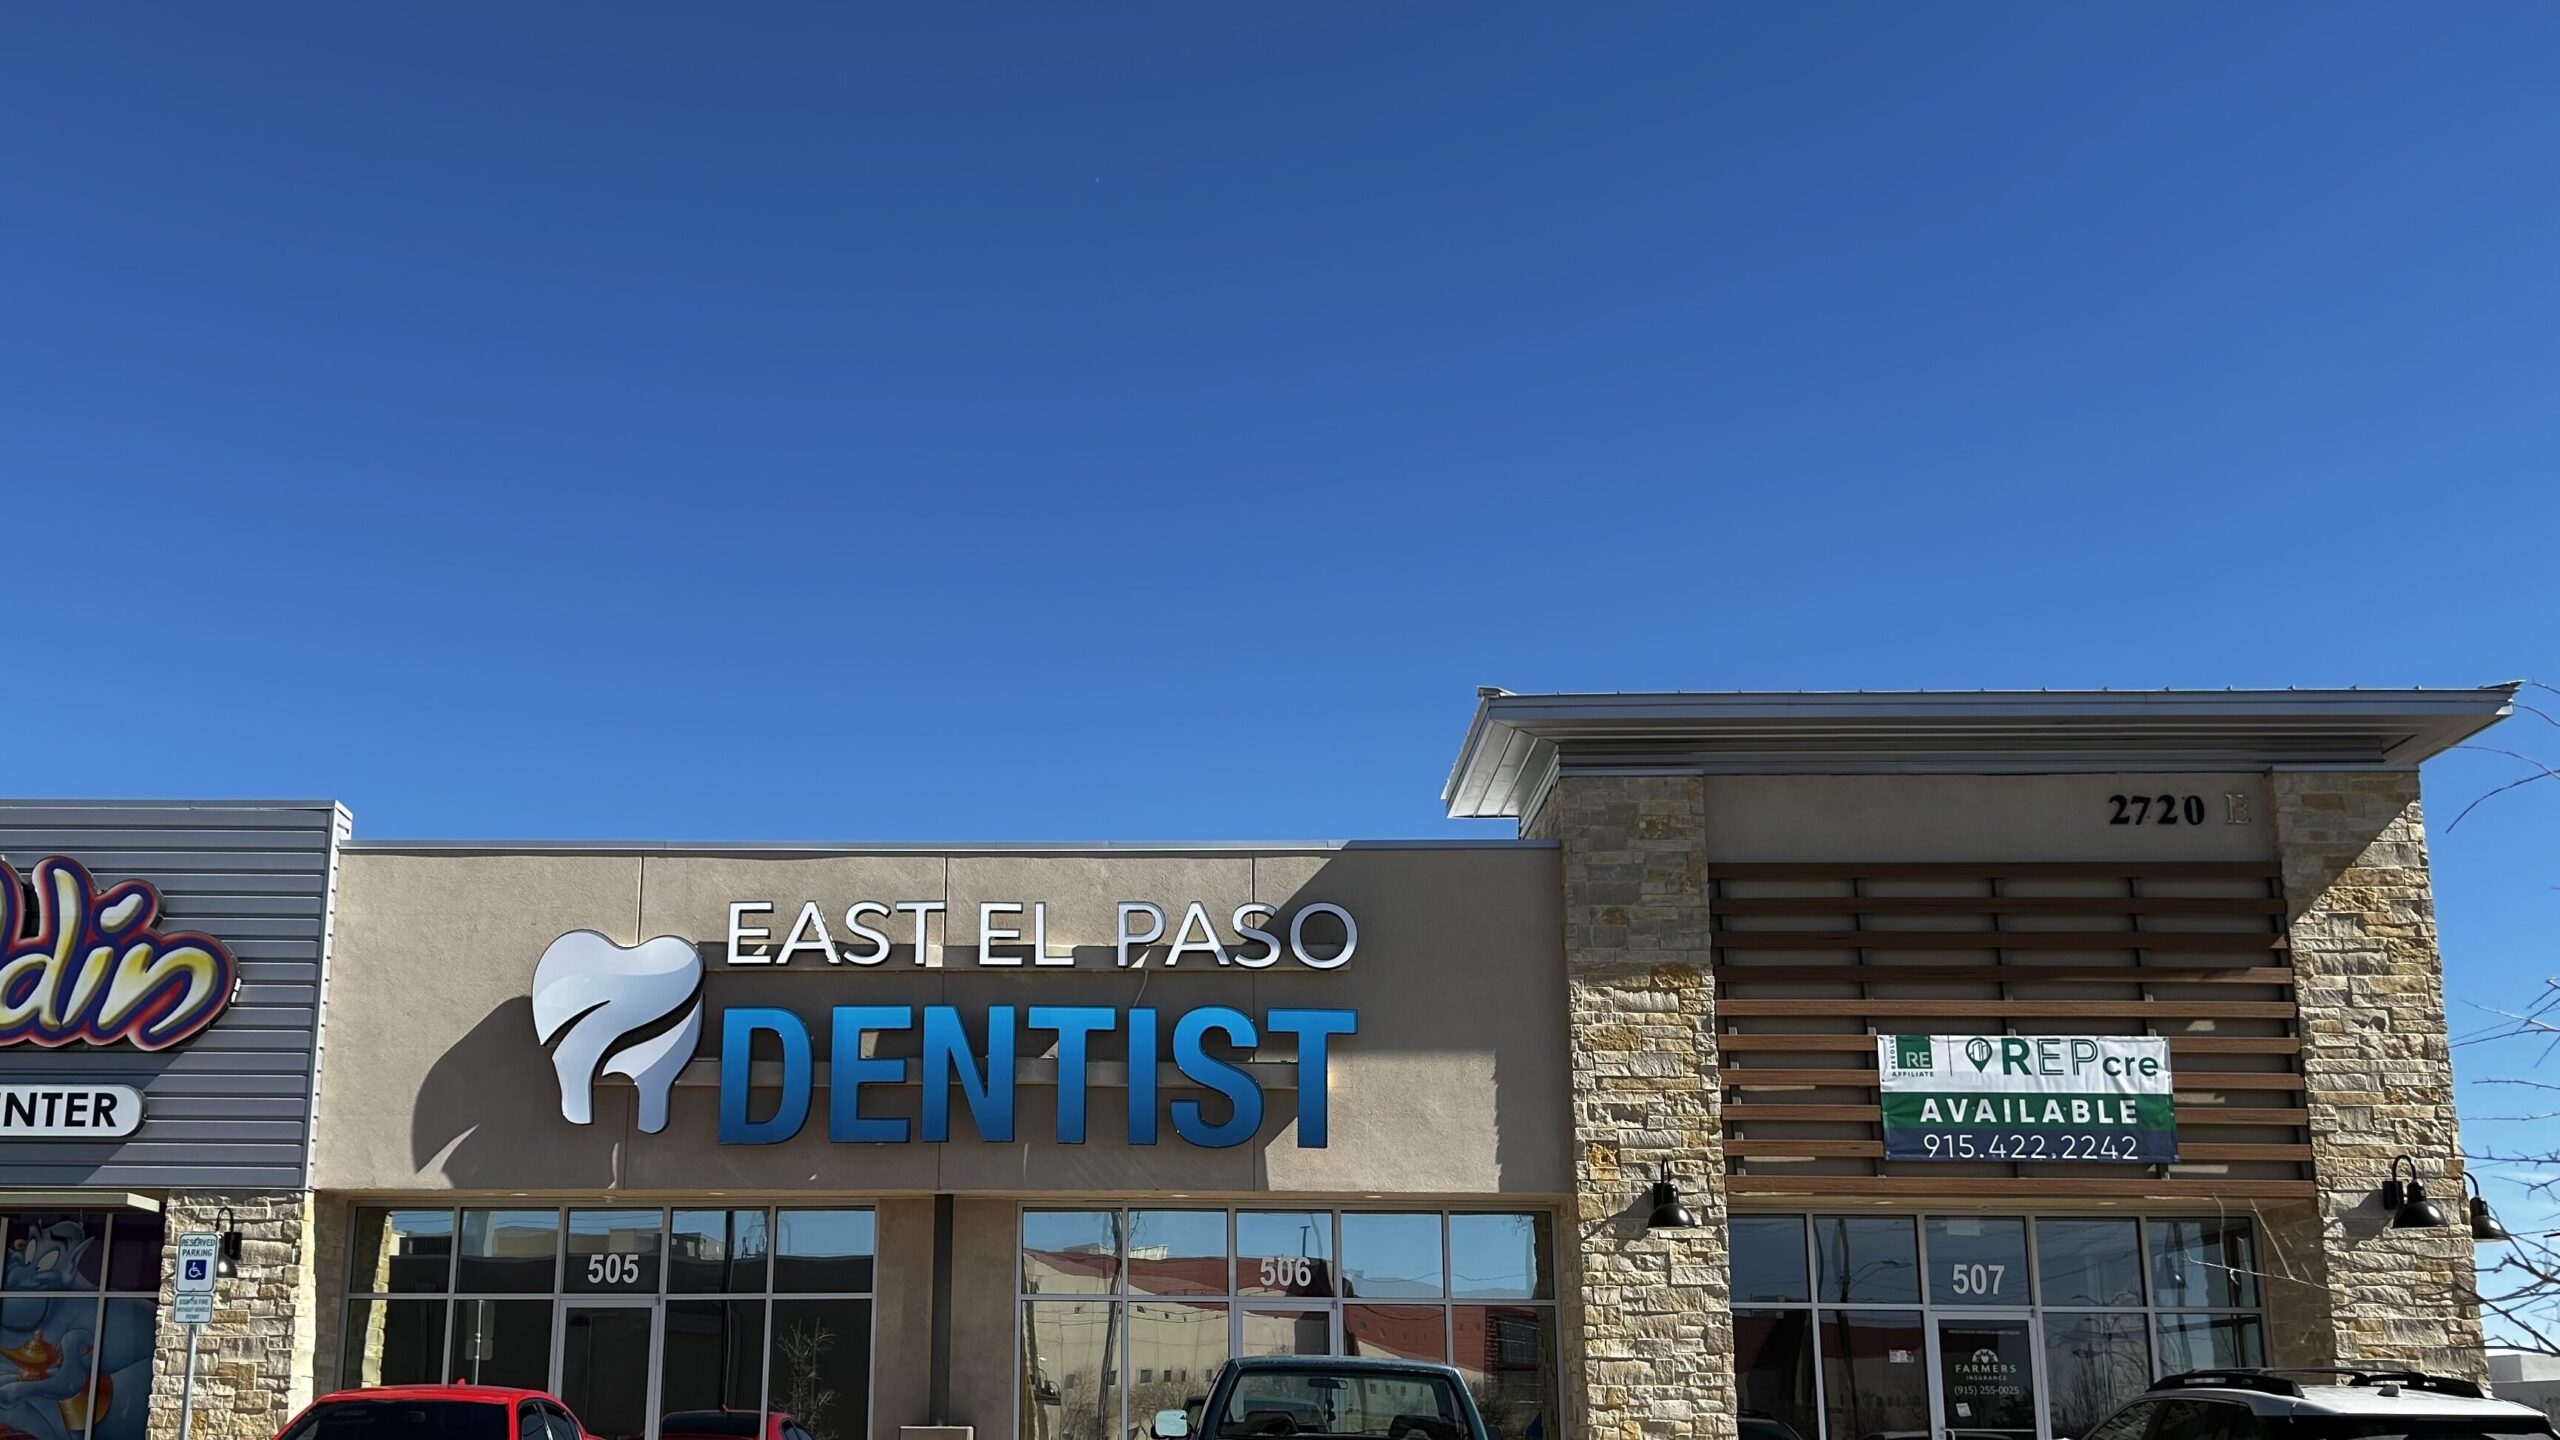 East El Paso Dentist - John Hayes